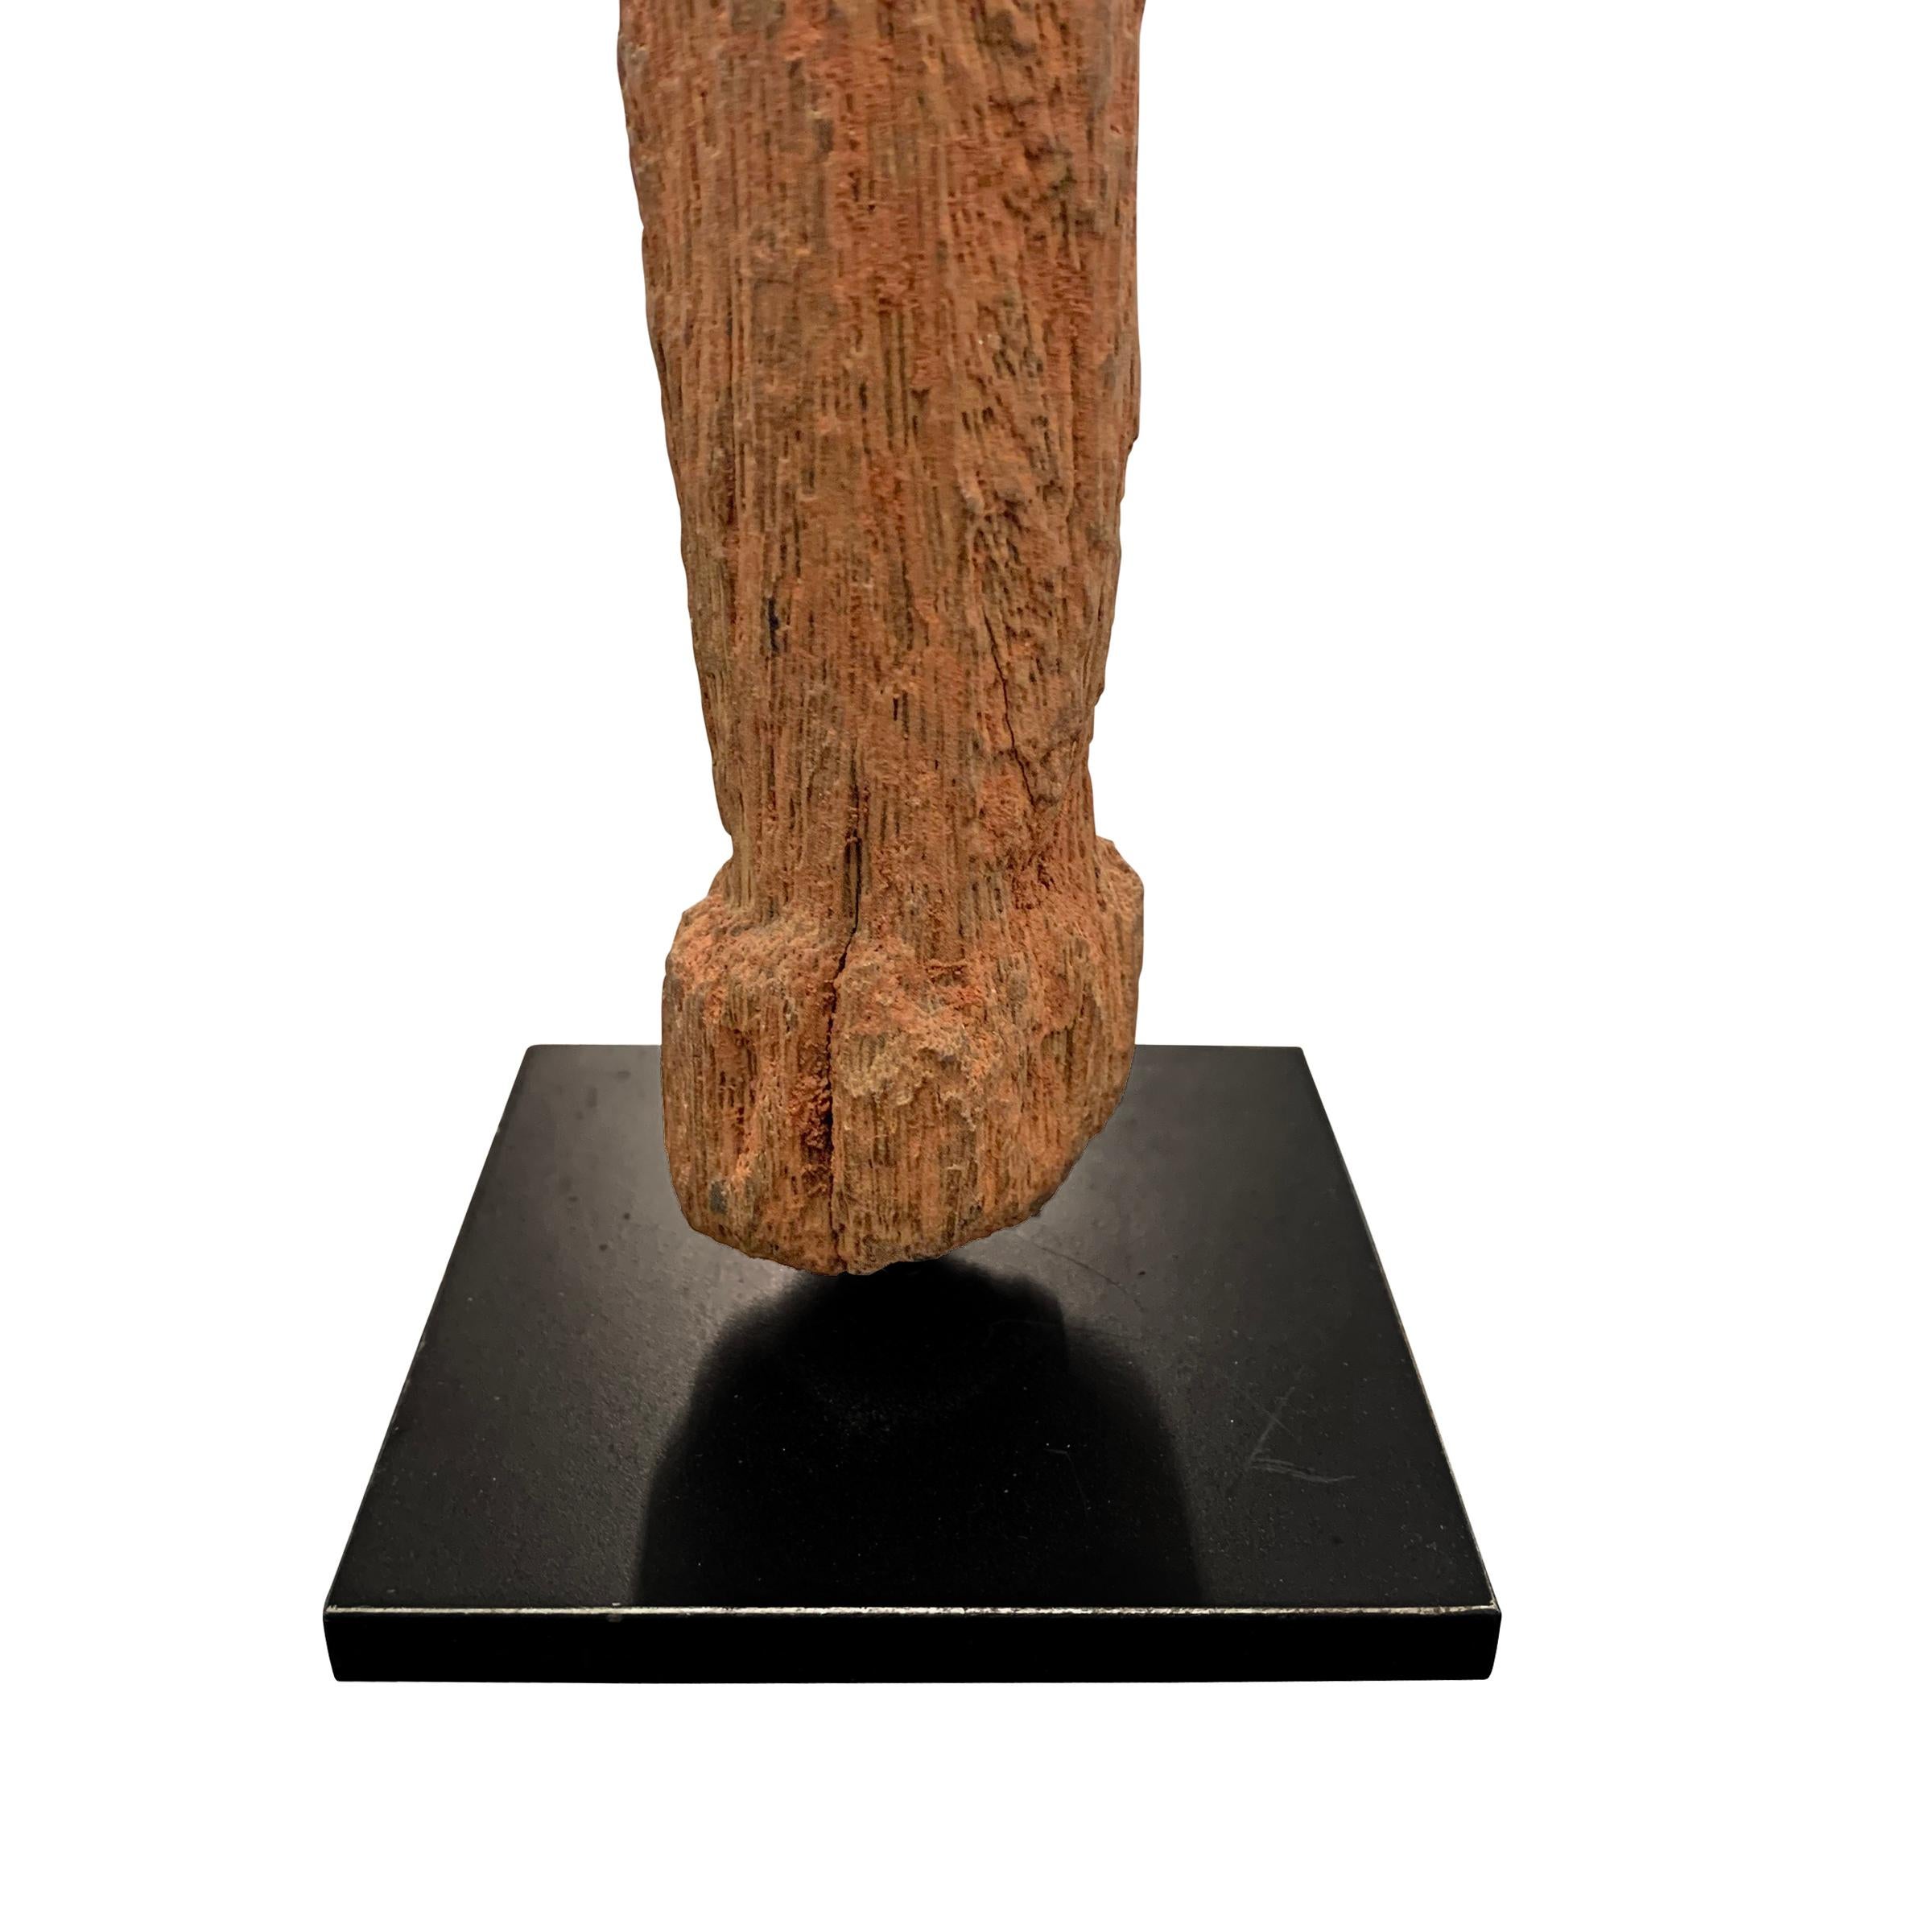 Wooden Fertility Figure (20. Jahrhundert)